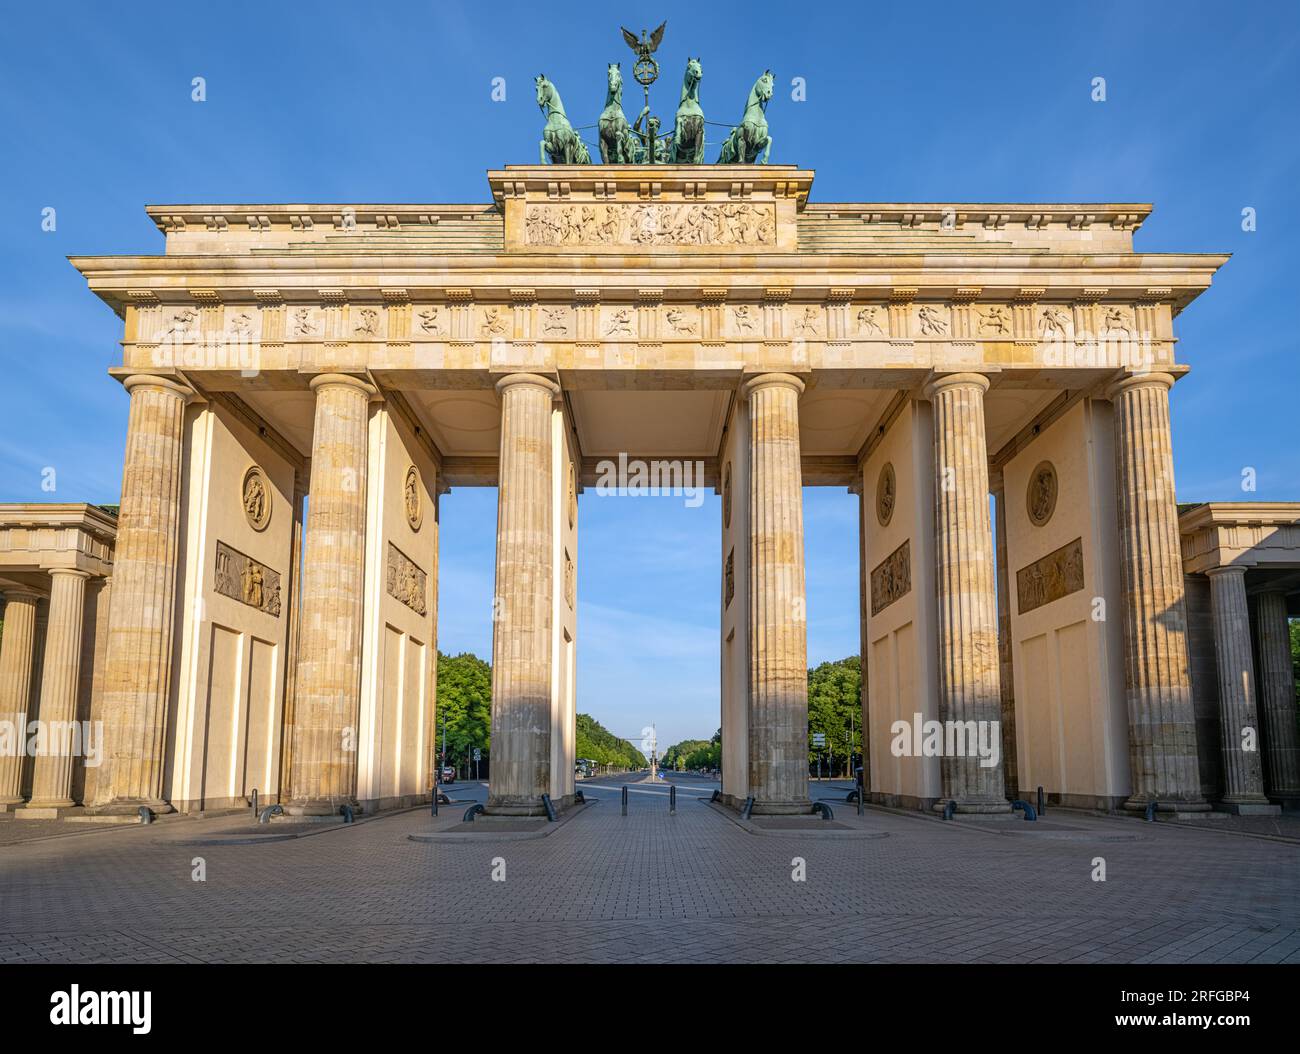 Hochauflösendes Bild des berühmten Brandenburger Tors in Berlin Stockfoto